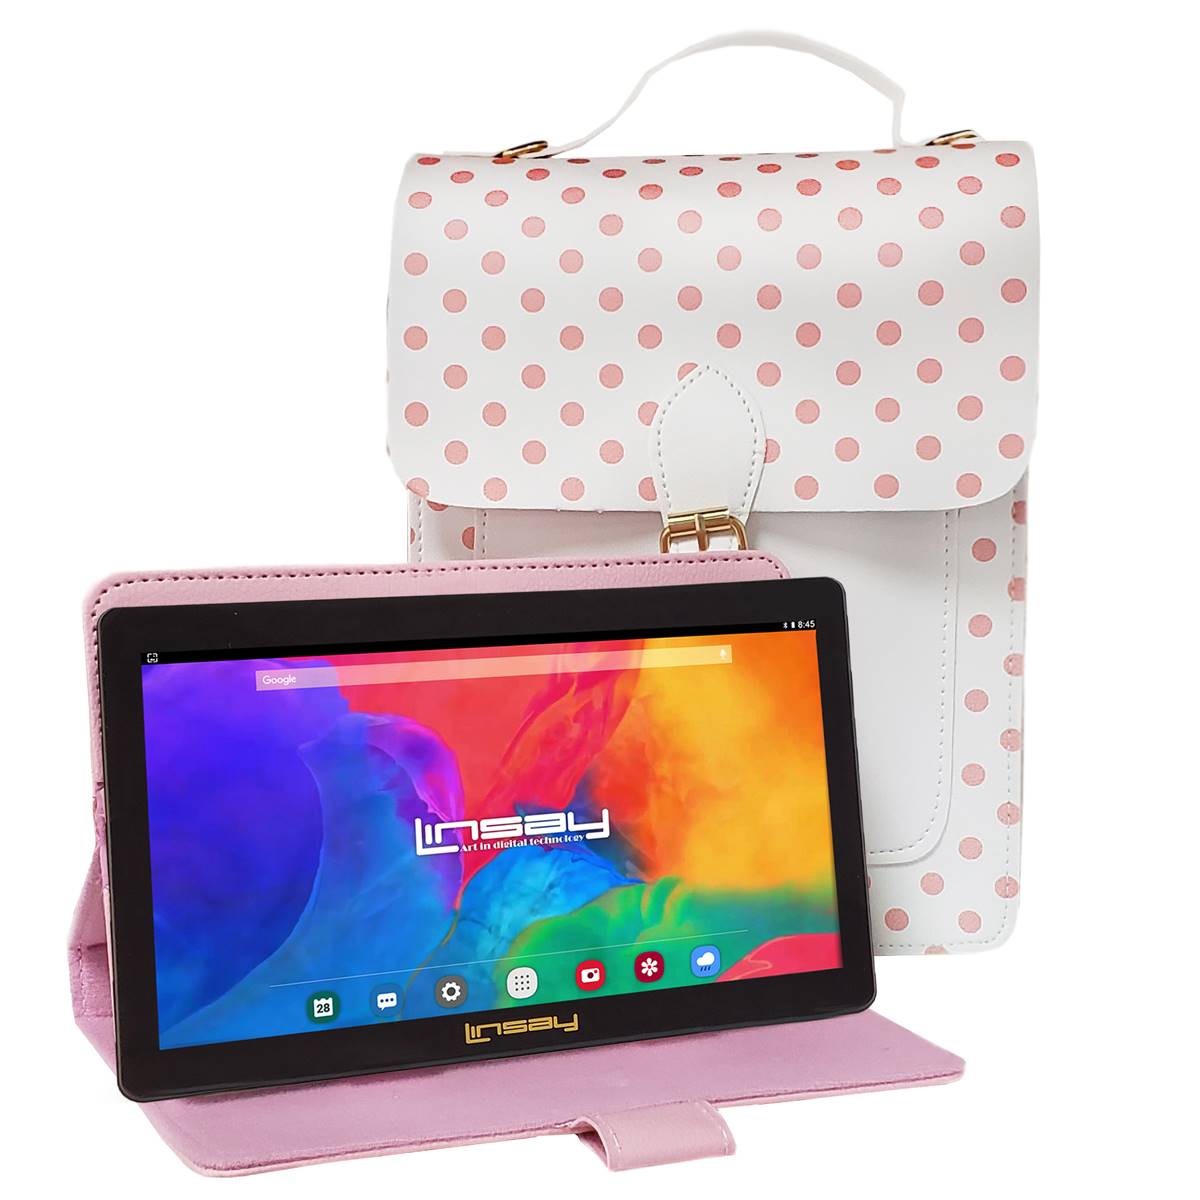 Linsay 7in. Quad Core Tablet With Polka Dot Fashion Handbag